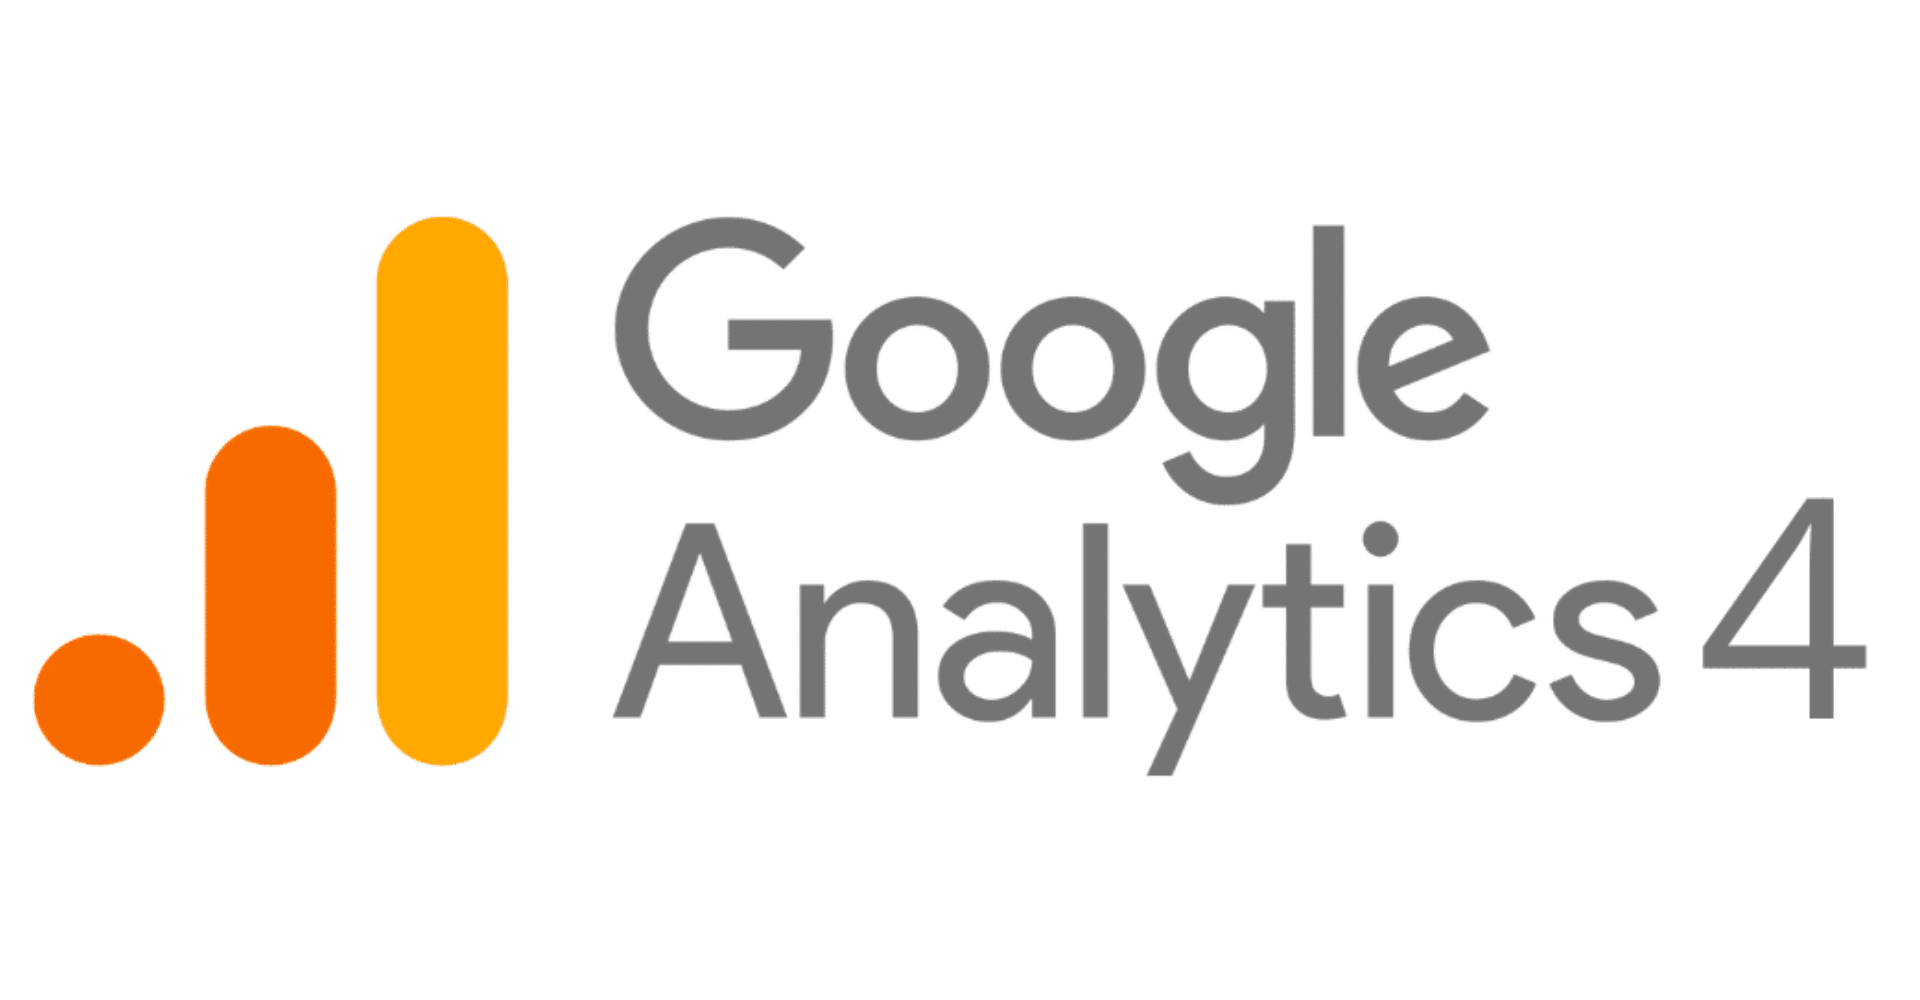 Google Analytics 4 announcement